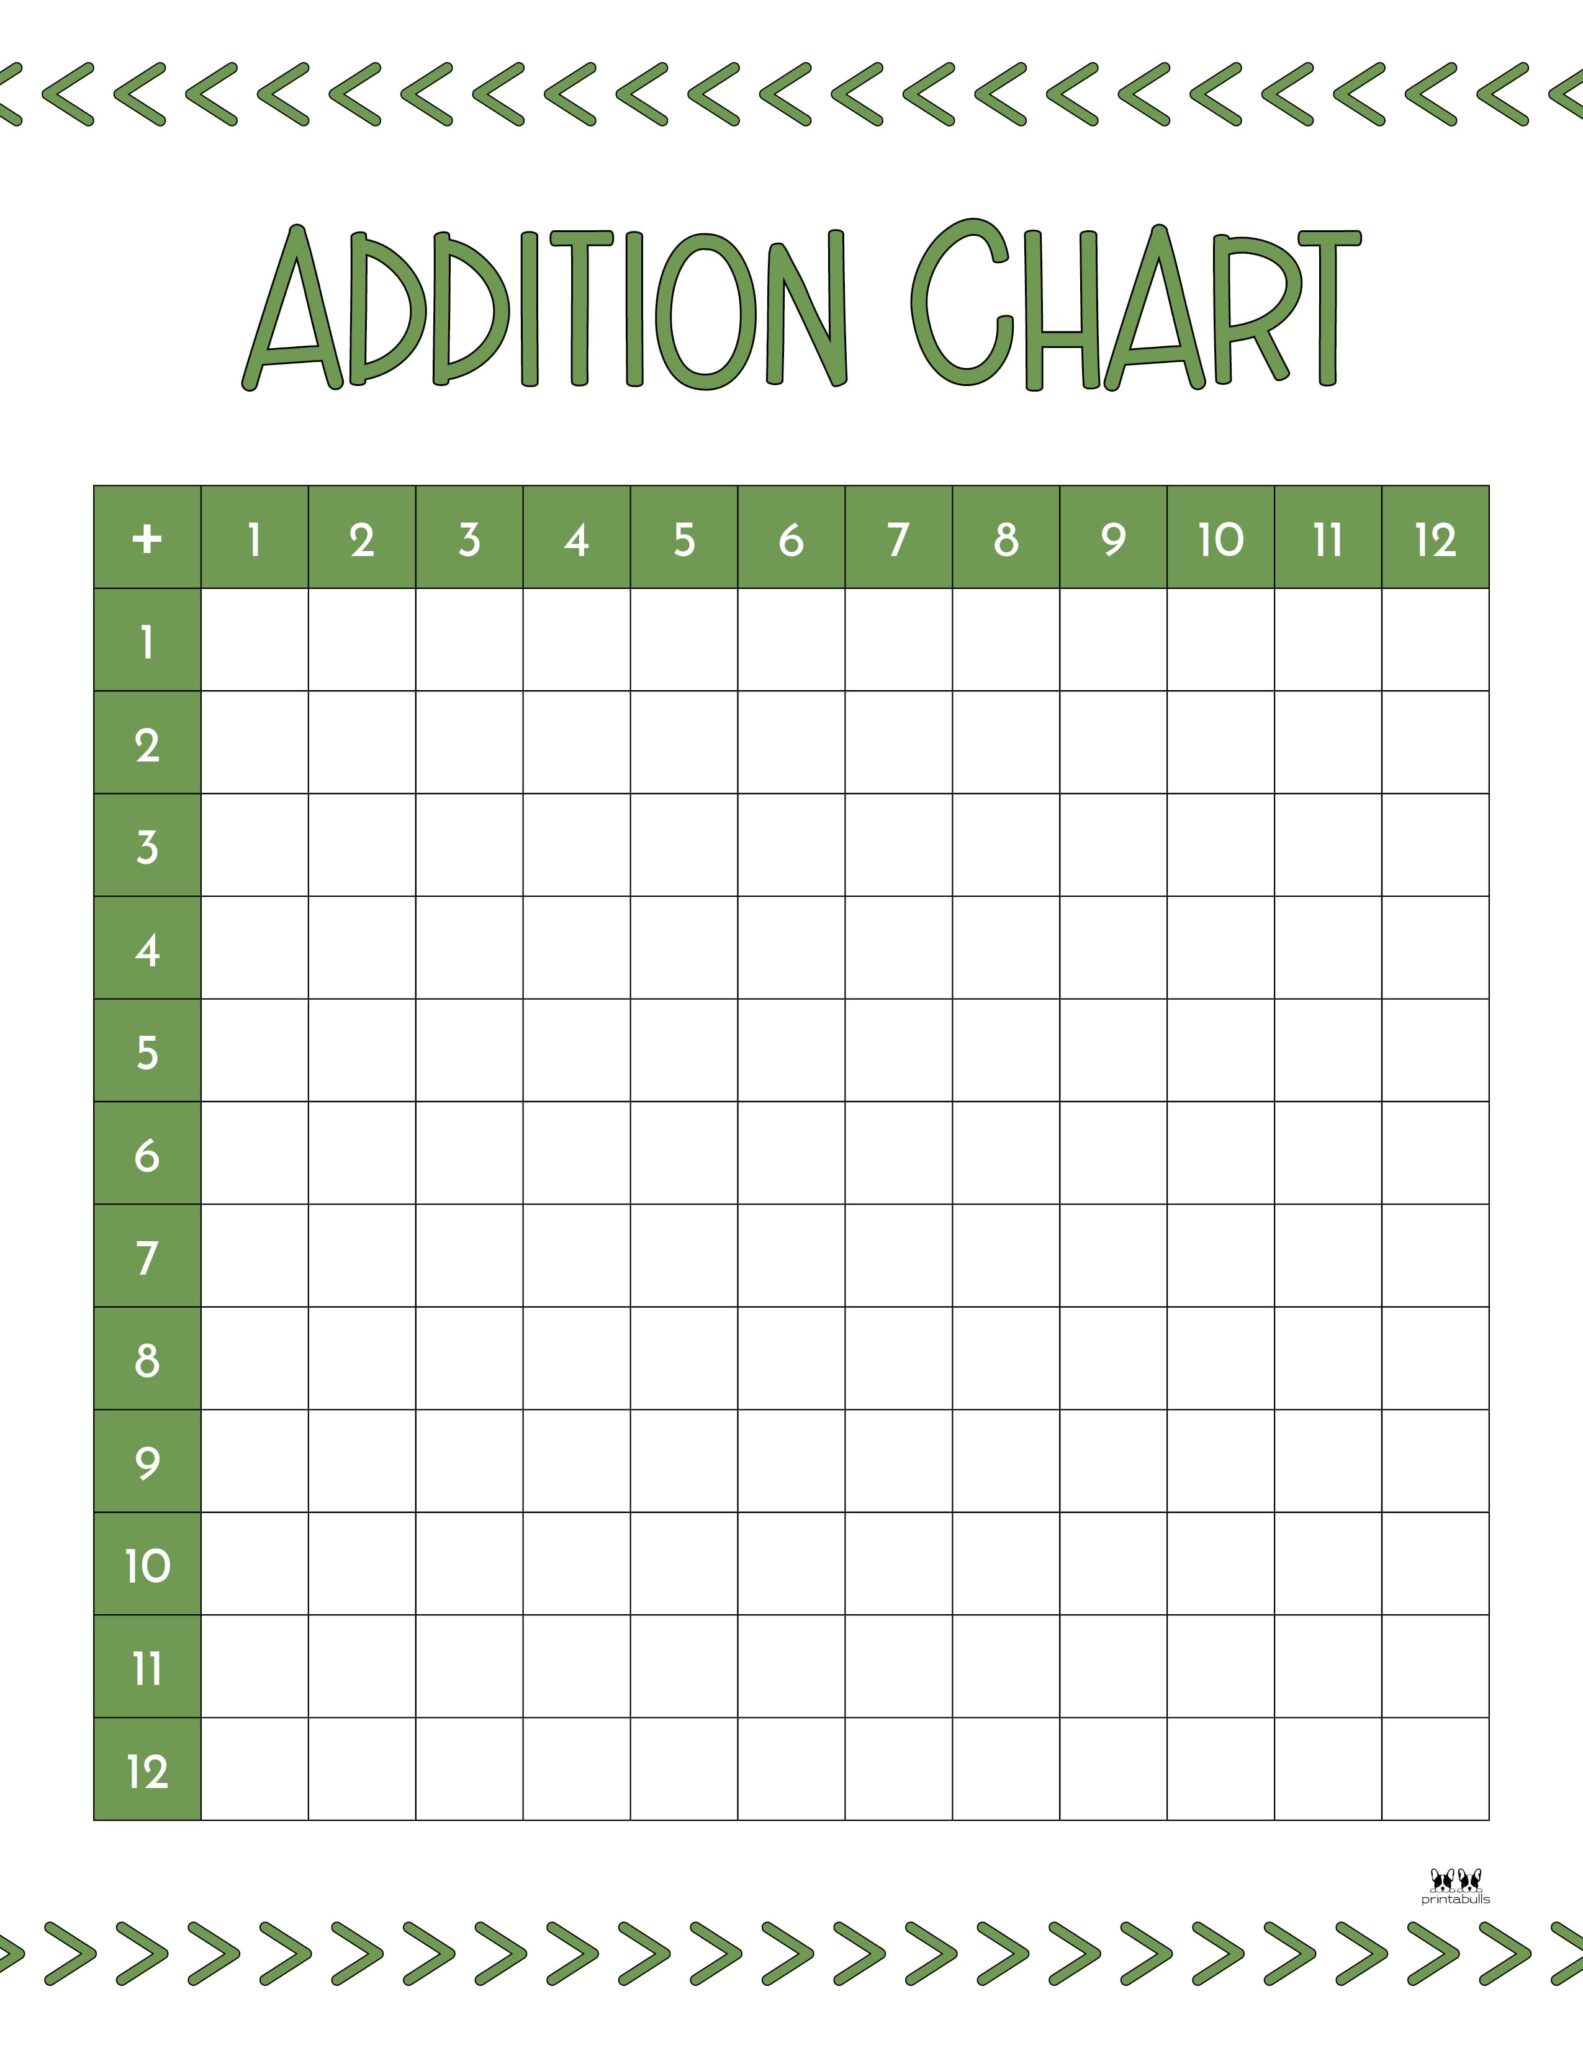 Addition Charts - 20 FREE Printables - PrintaBulk